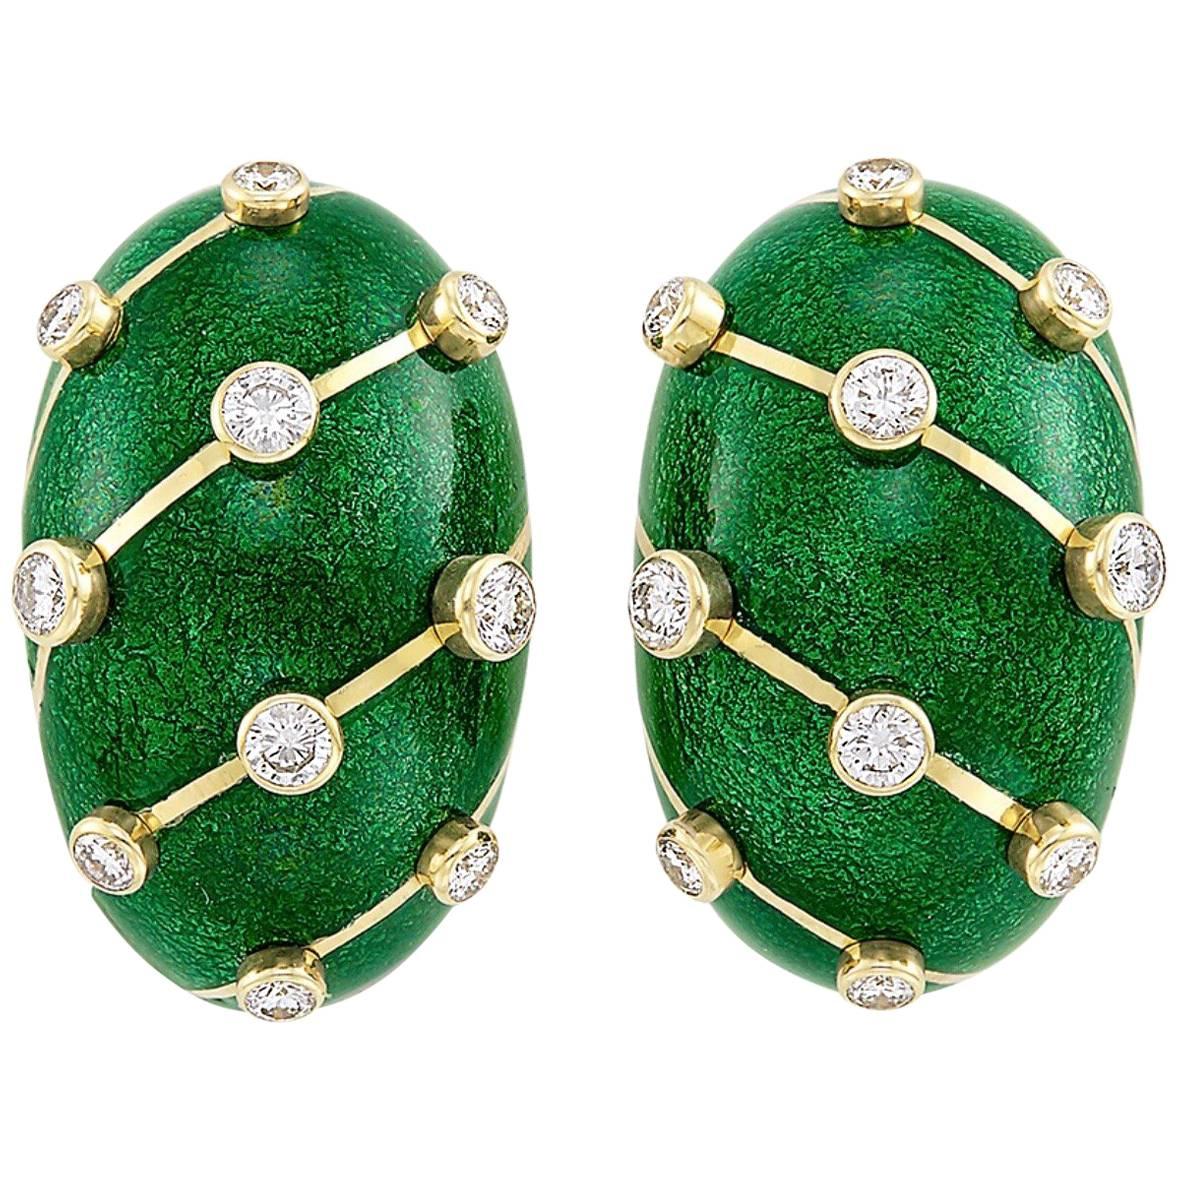 Tiffany & Co. Gold, Green Paillonné Enamel and Diamond Clip-On Earrings